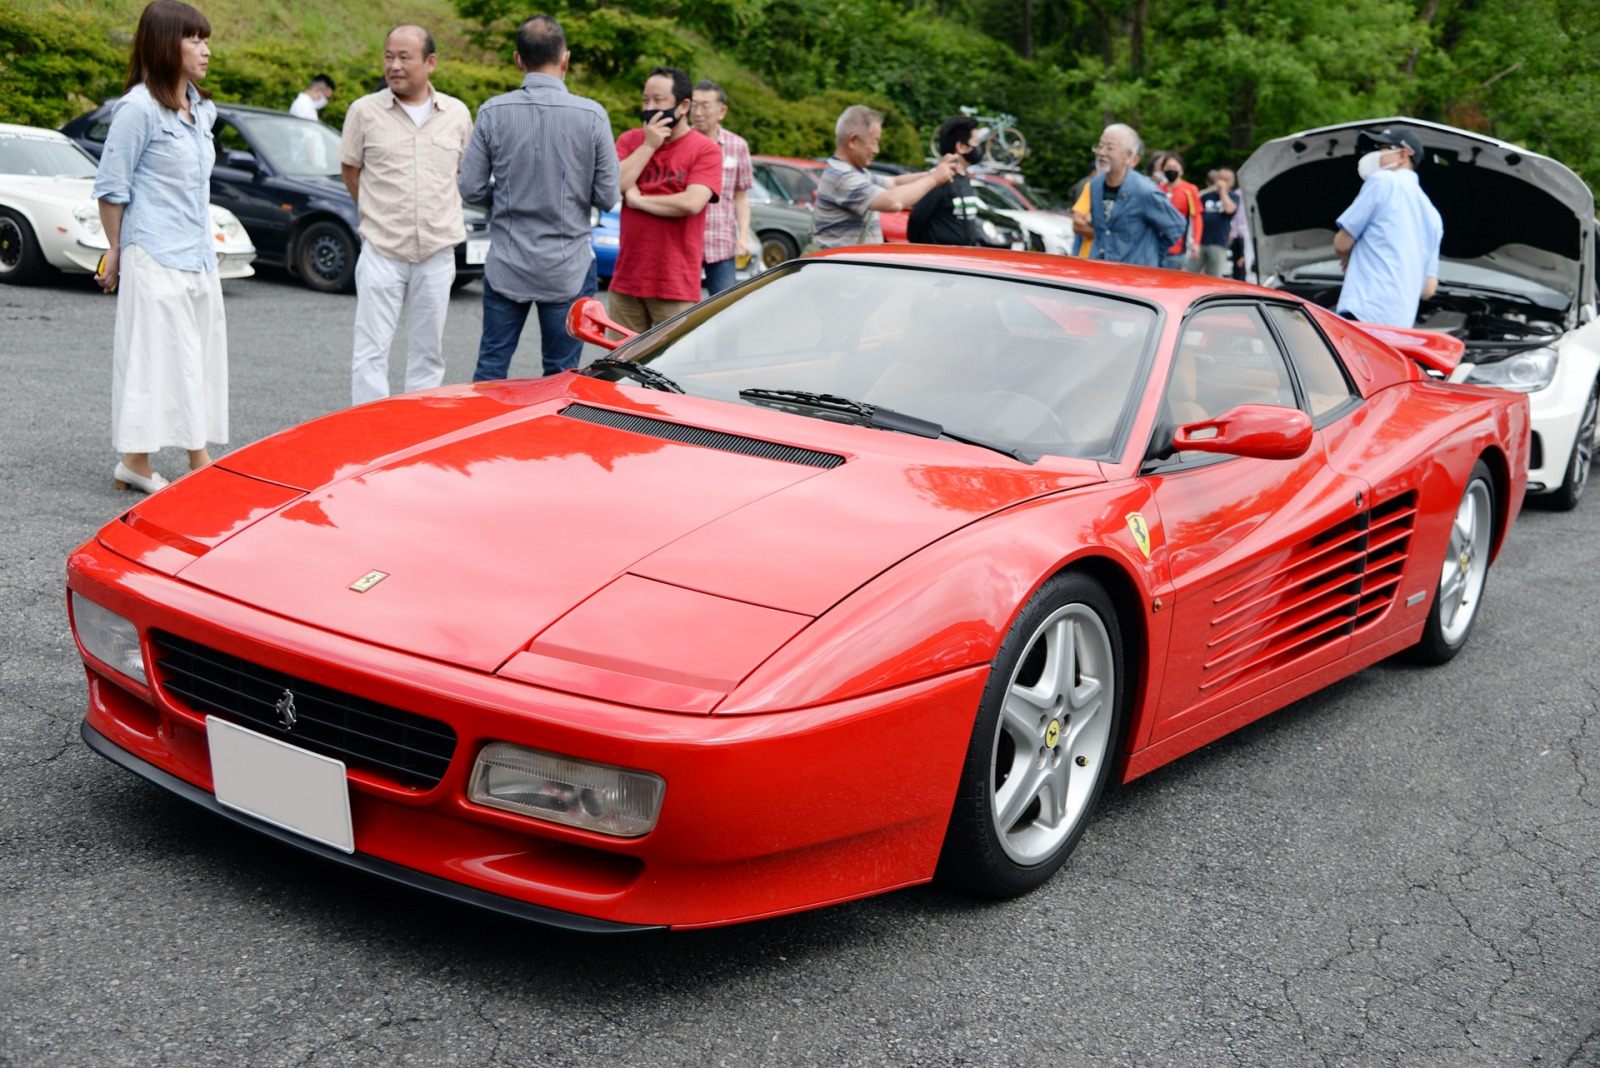 Ferrari308gts02 画像 フェラーリ ランボルギーニ ロータス エスプリ フラッと立ち寄れるミーティングにスーパーカーが大集結 ダムサンデー 草木 Vol 1 Clicccar Com